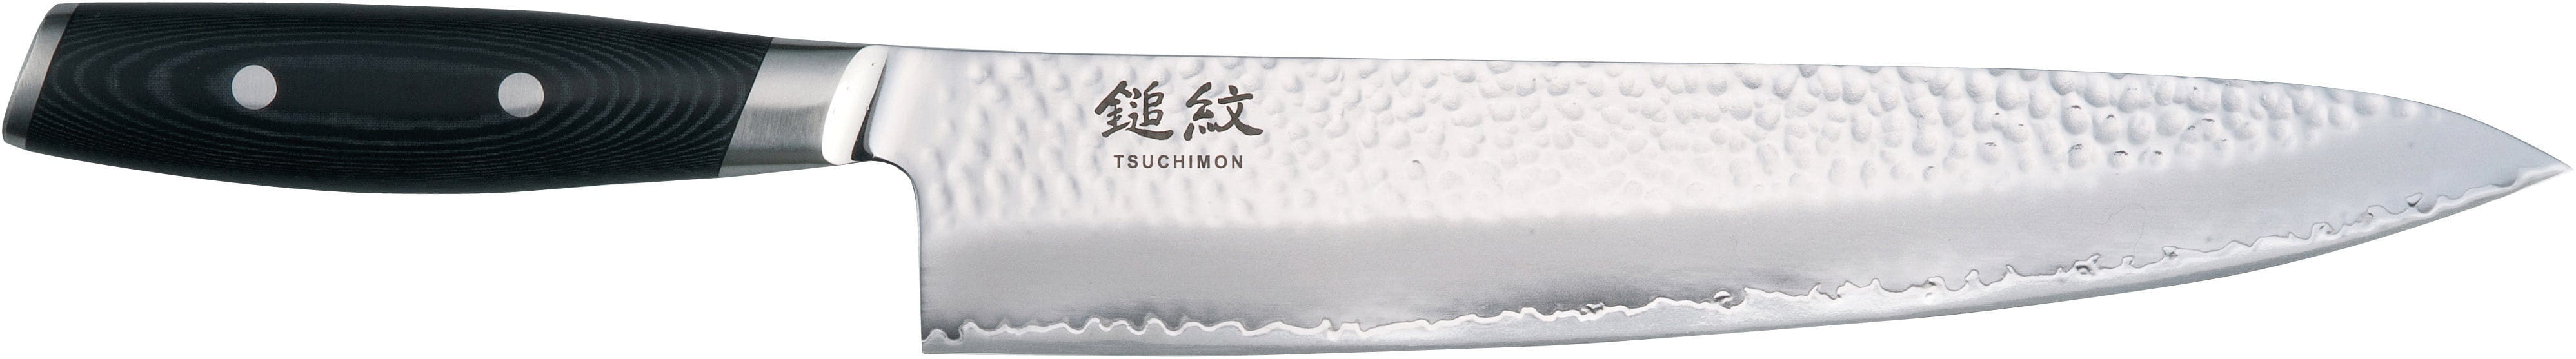 Yaxell Tsuchimon Chef's Knife, 25,5 Cm